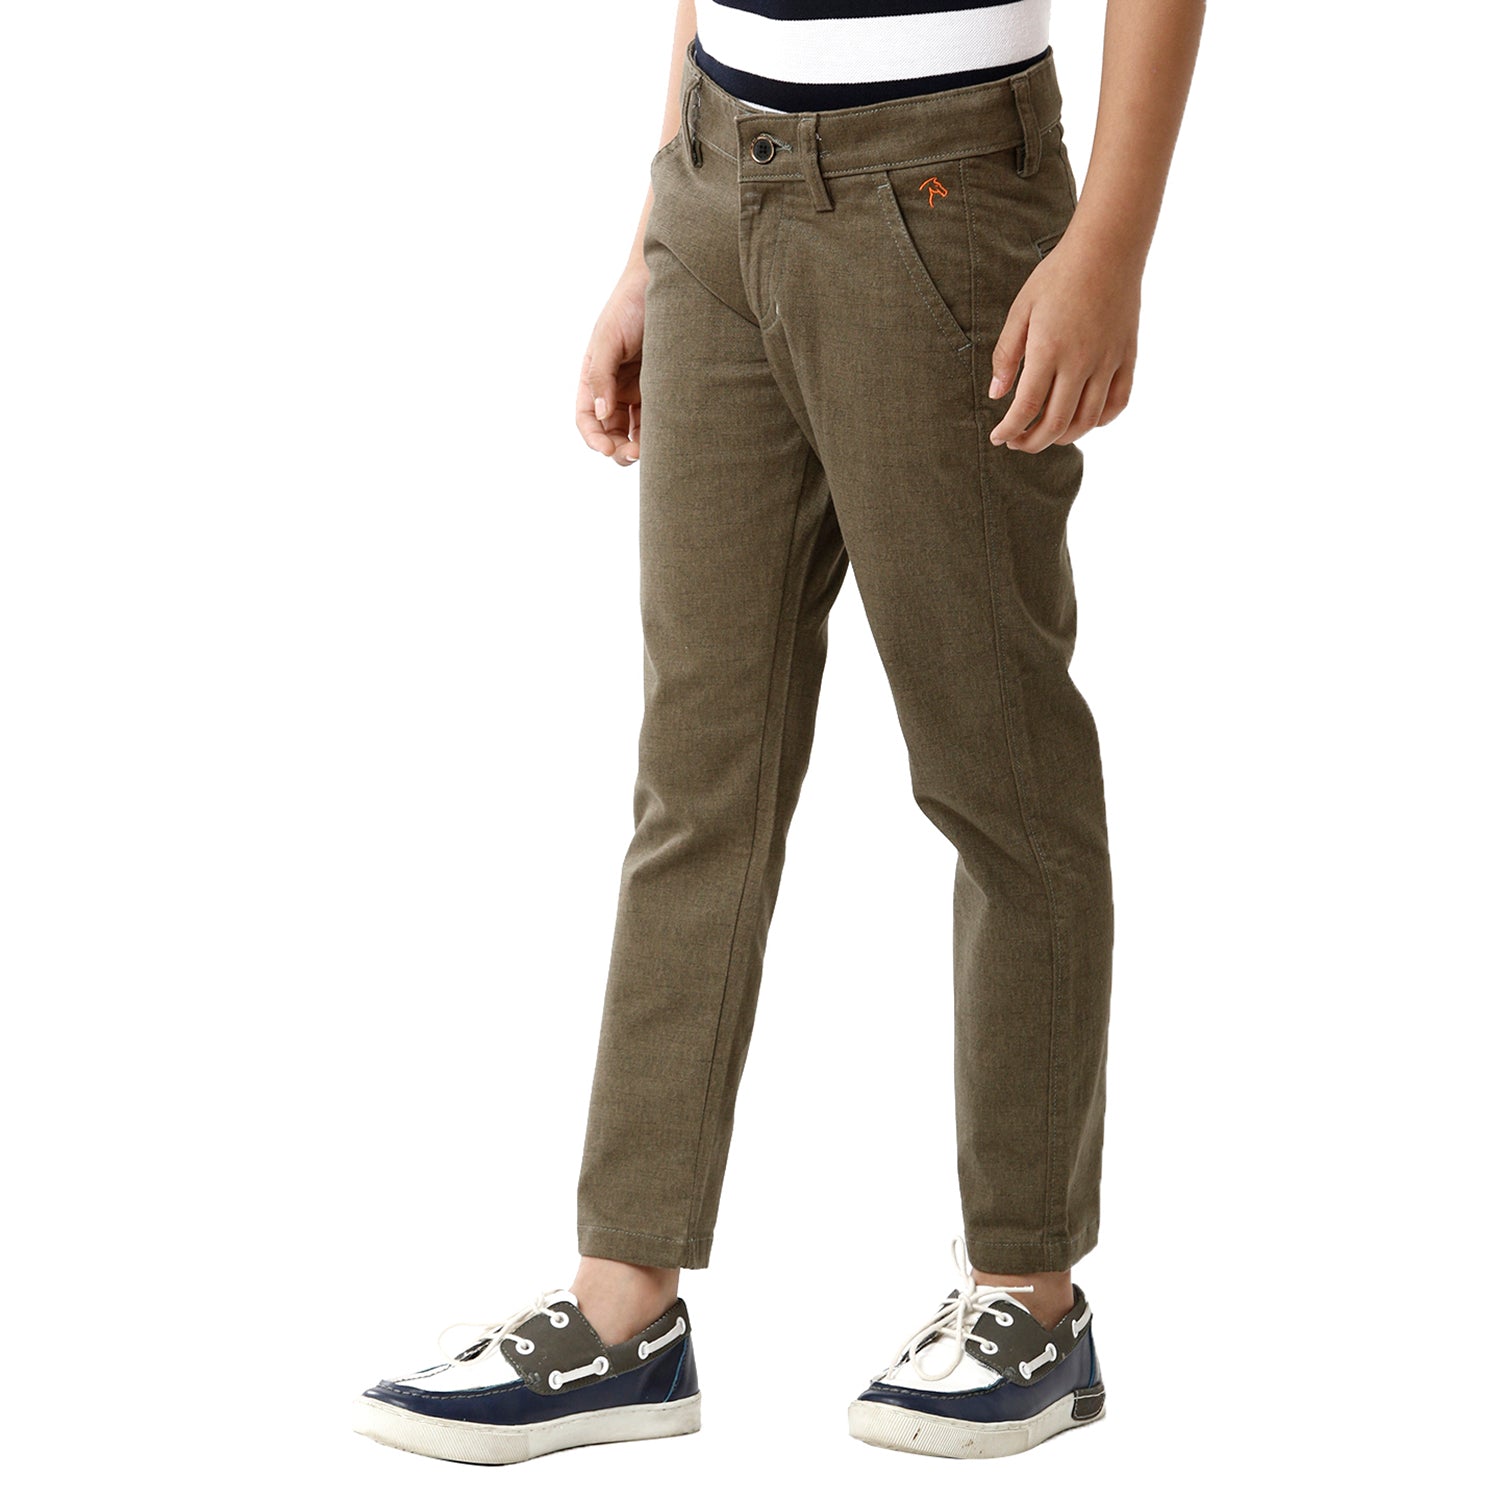 Buy Blue Trousers & Pants for Boys by KB TEAM SPIRIT Online | Ajio.com